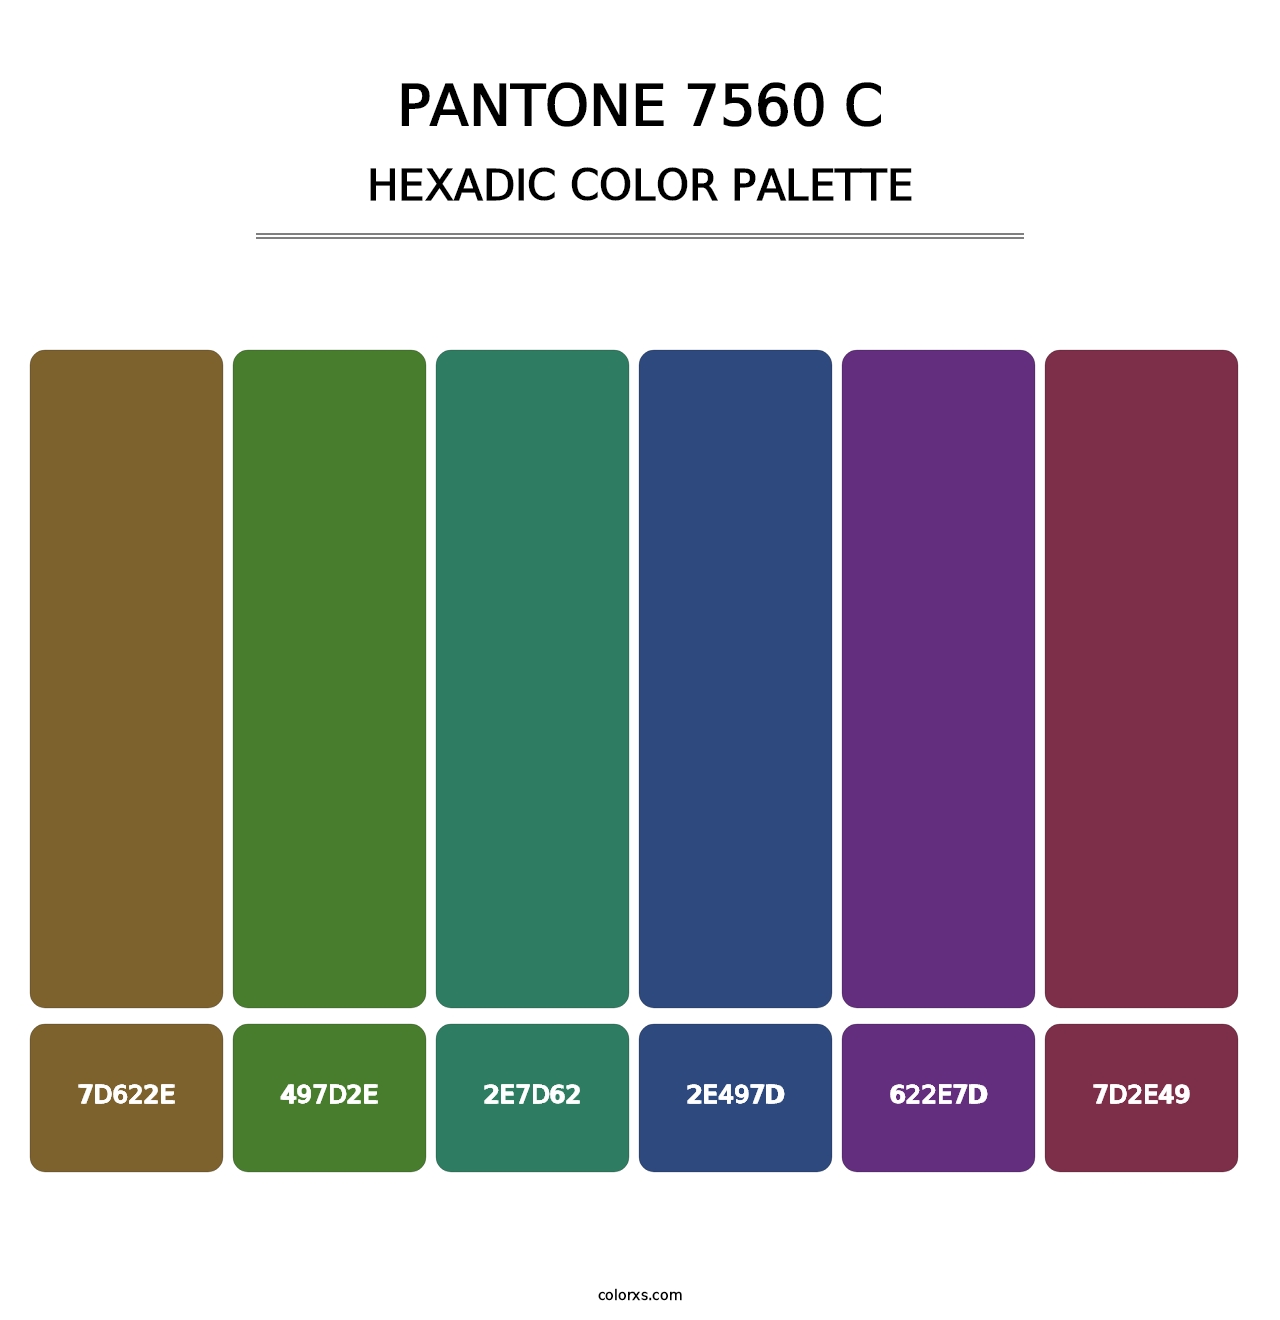 PANTONE 7560 C - Hexadic Color Palette